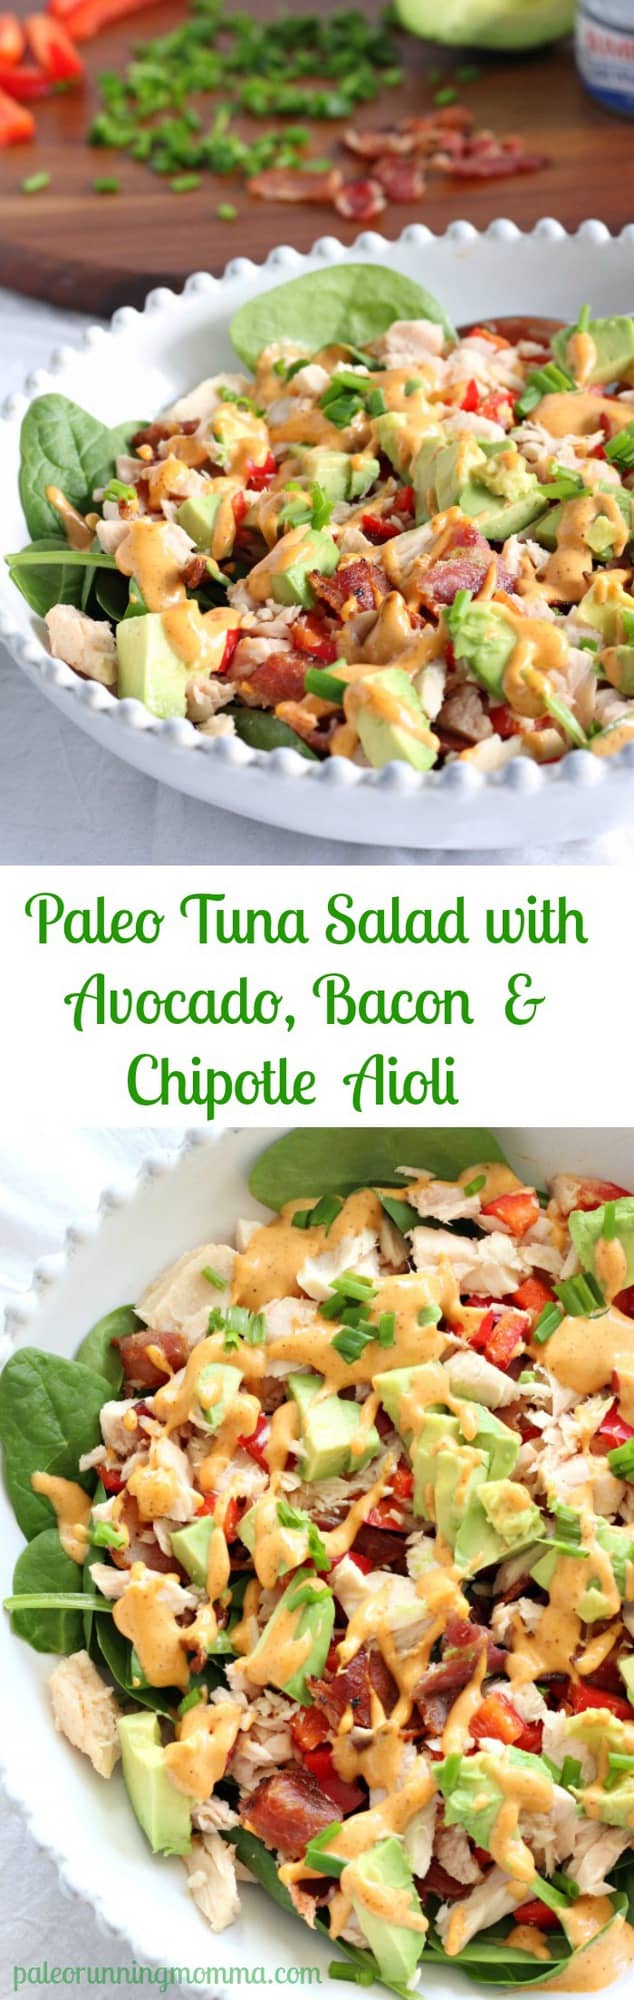 Paleo Tuna Salad with Avocado, Bacon and Chipotle aioli - Whole30, grain free, dairy free